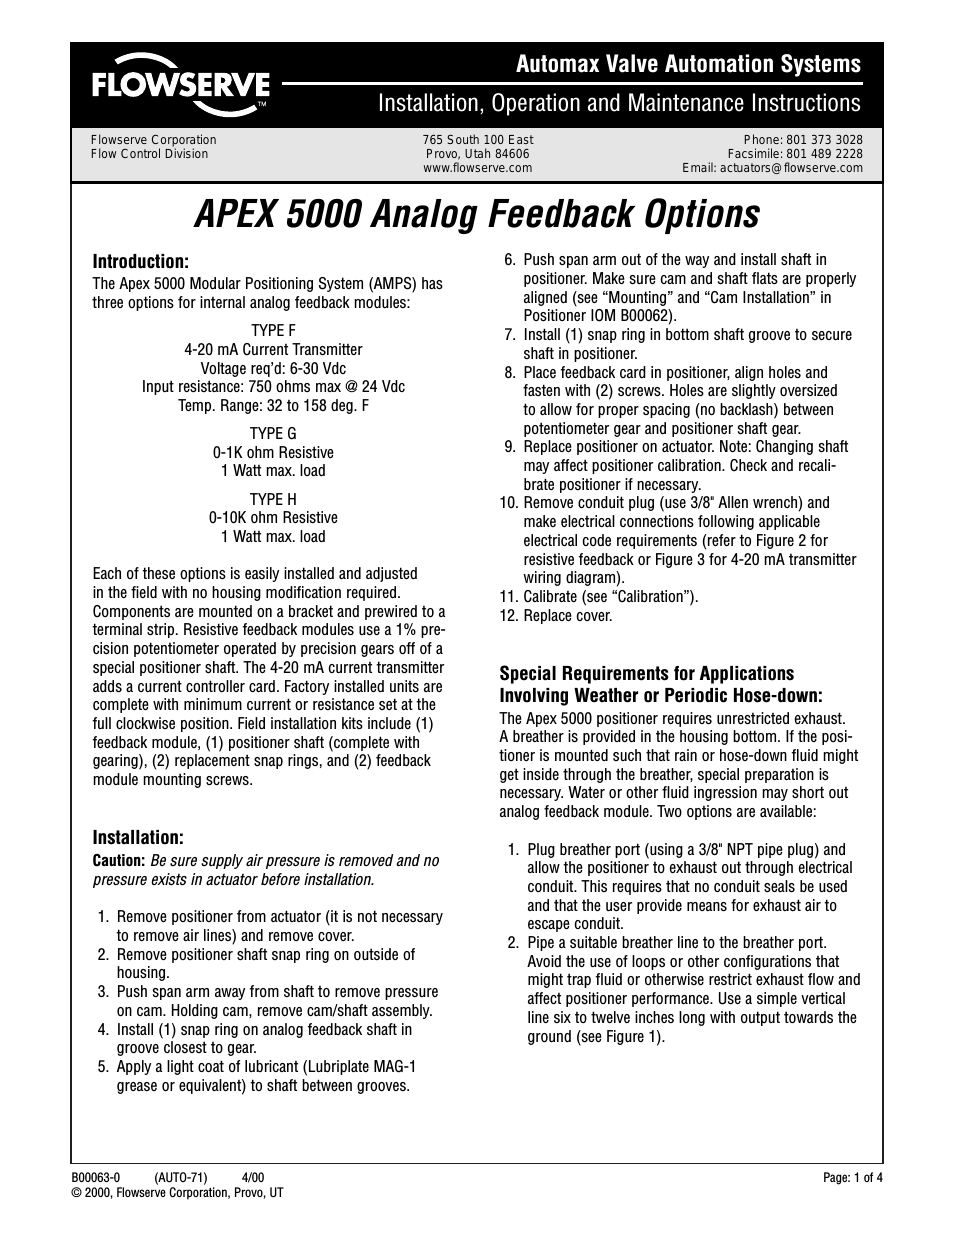 APEX 5000 Analog Feedback Options